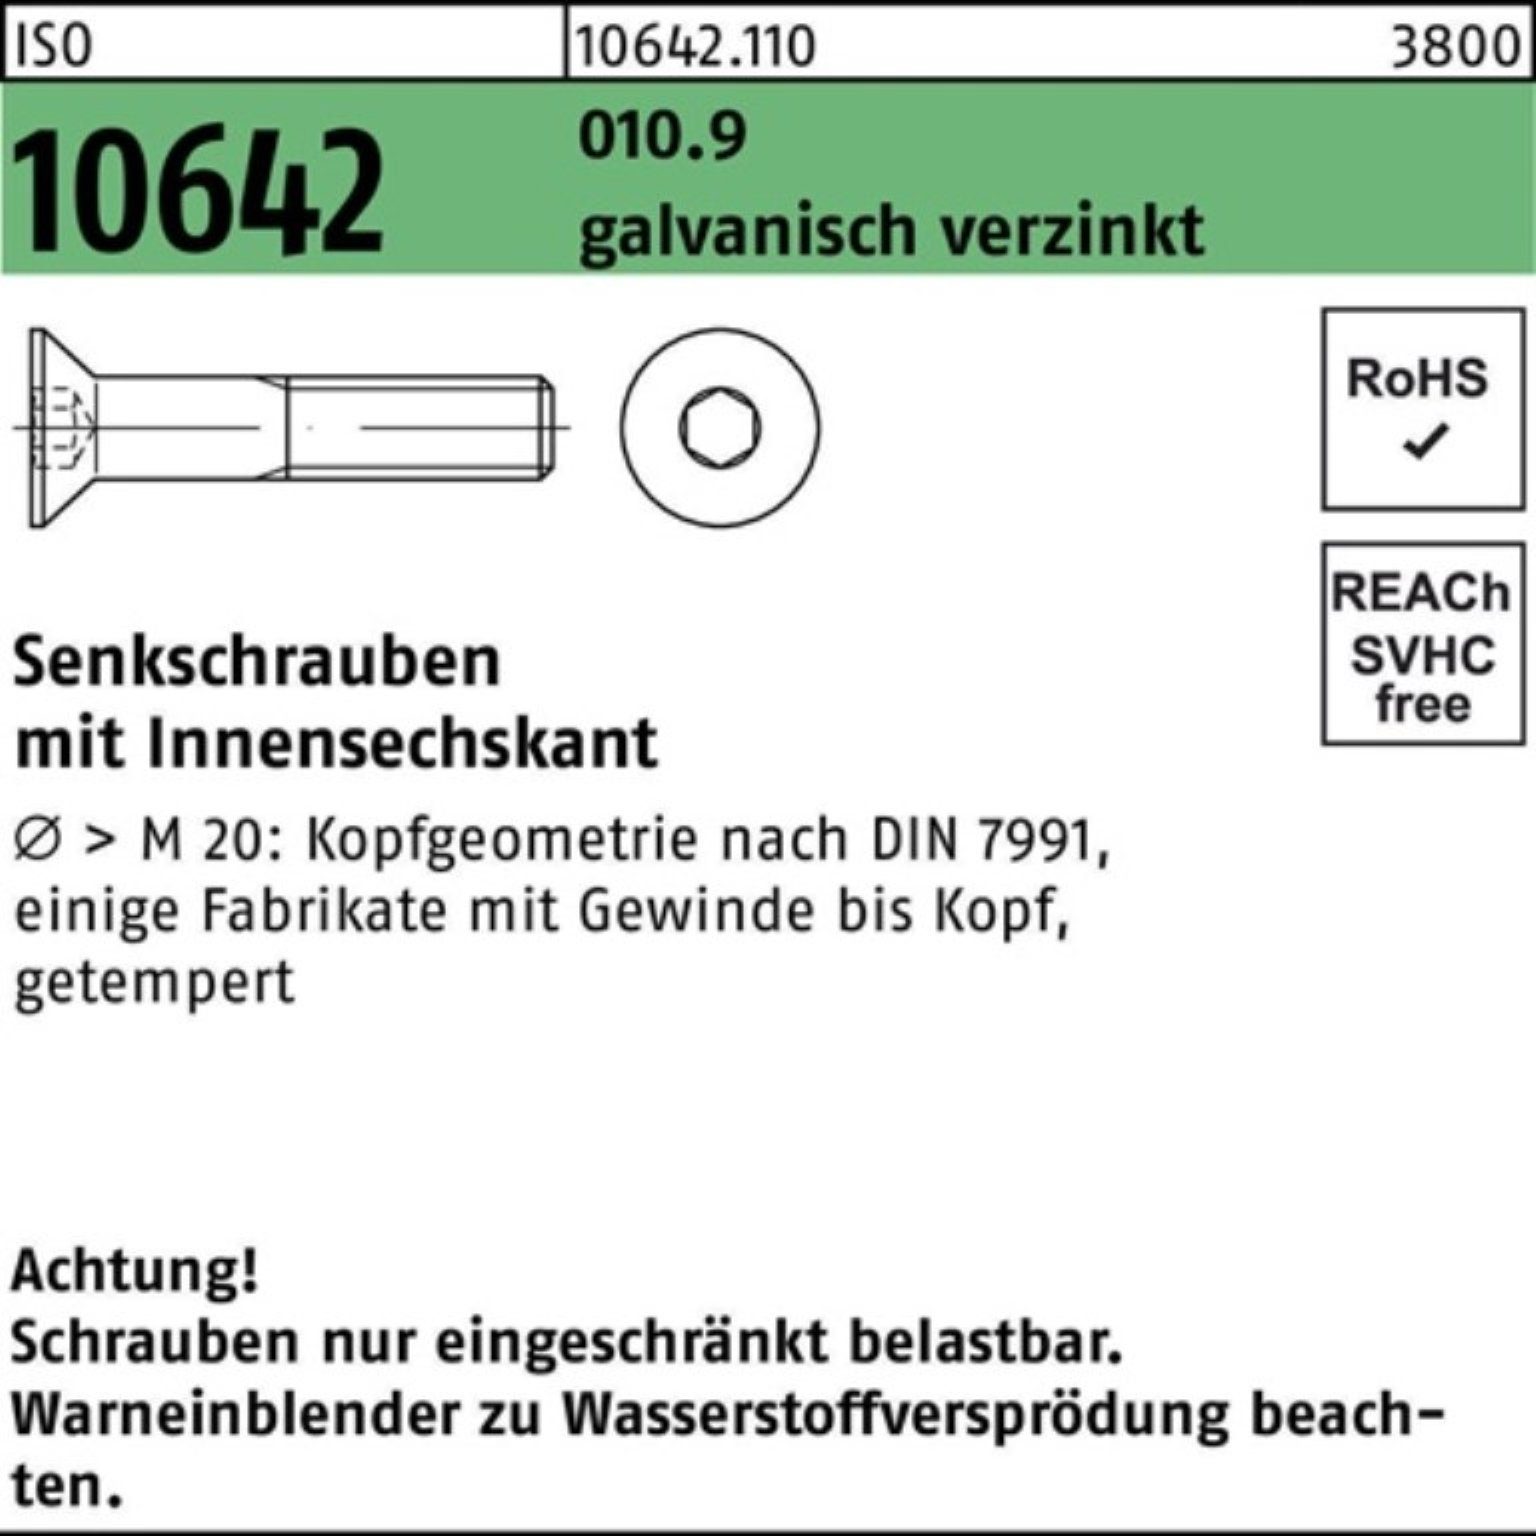 Reyher Senkschraube 200er Pack Innen-6kt 10642 ISO Senkschraube M8x 20 16 010.9 galv.verz